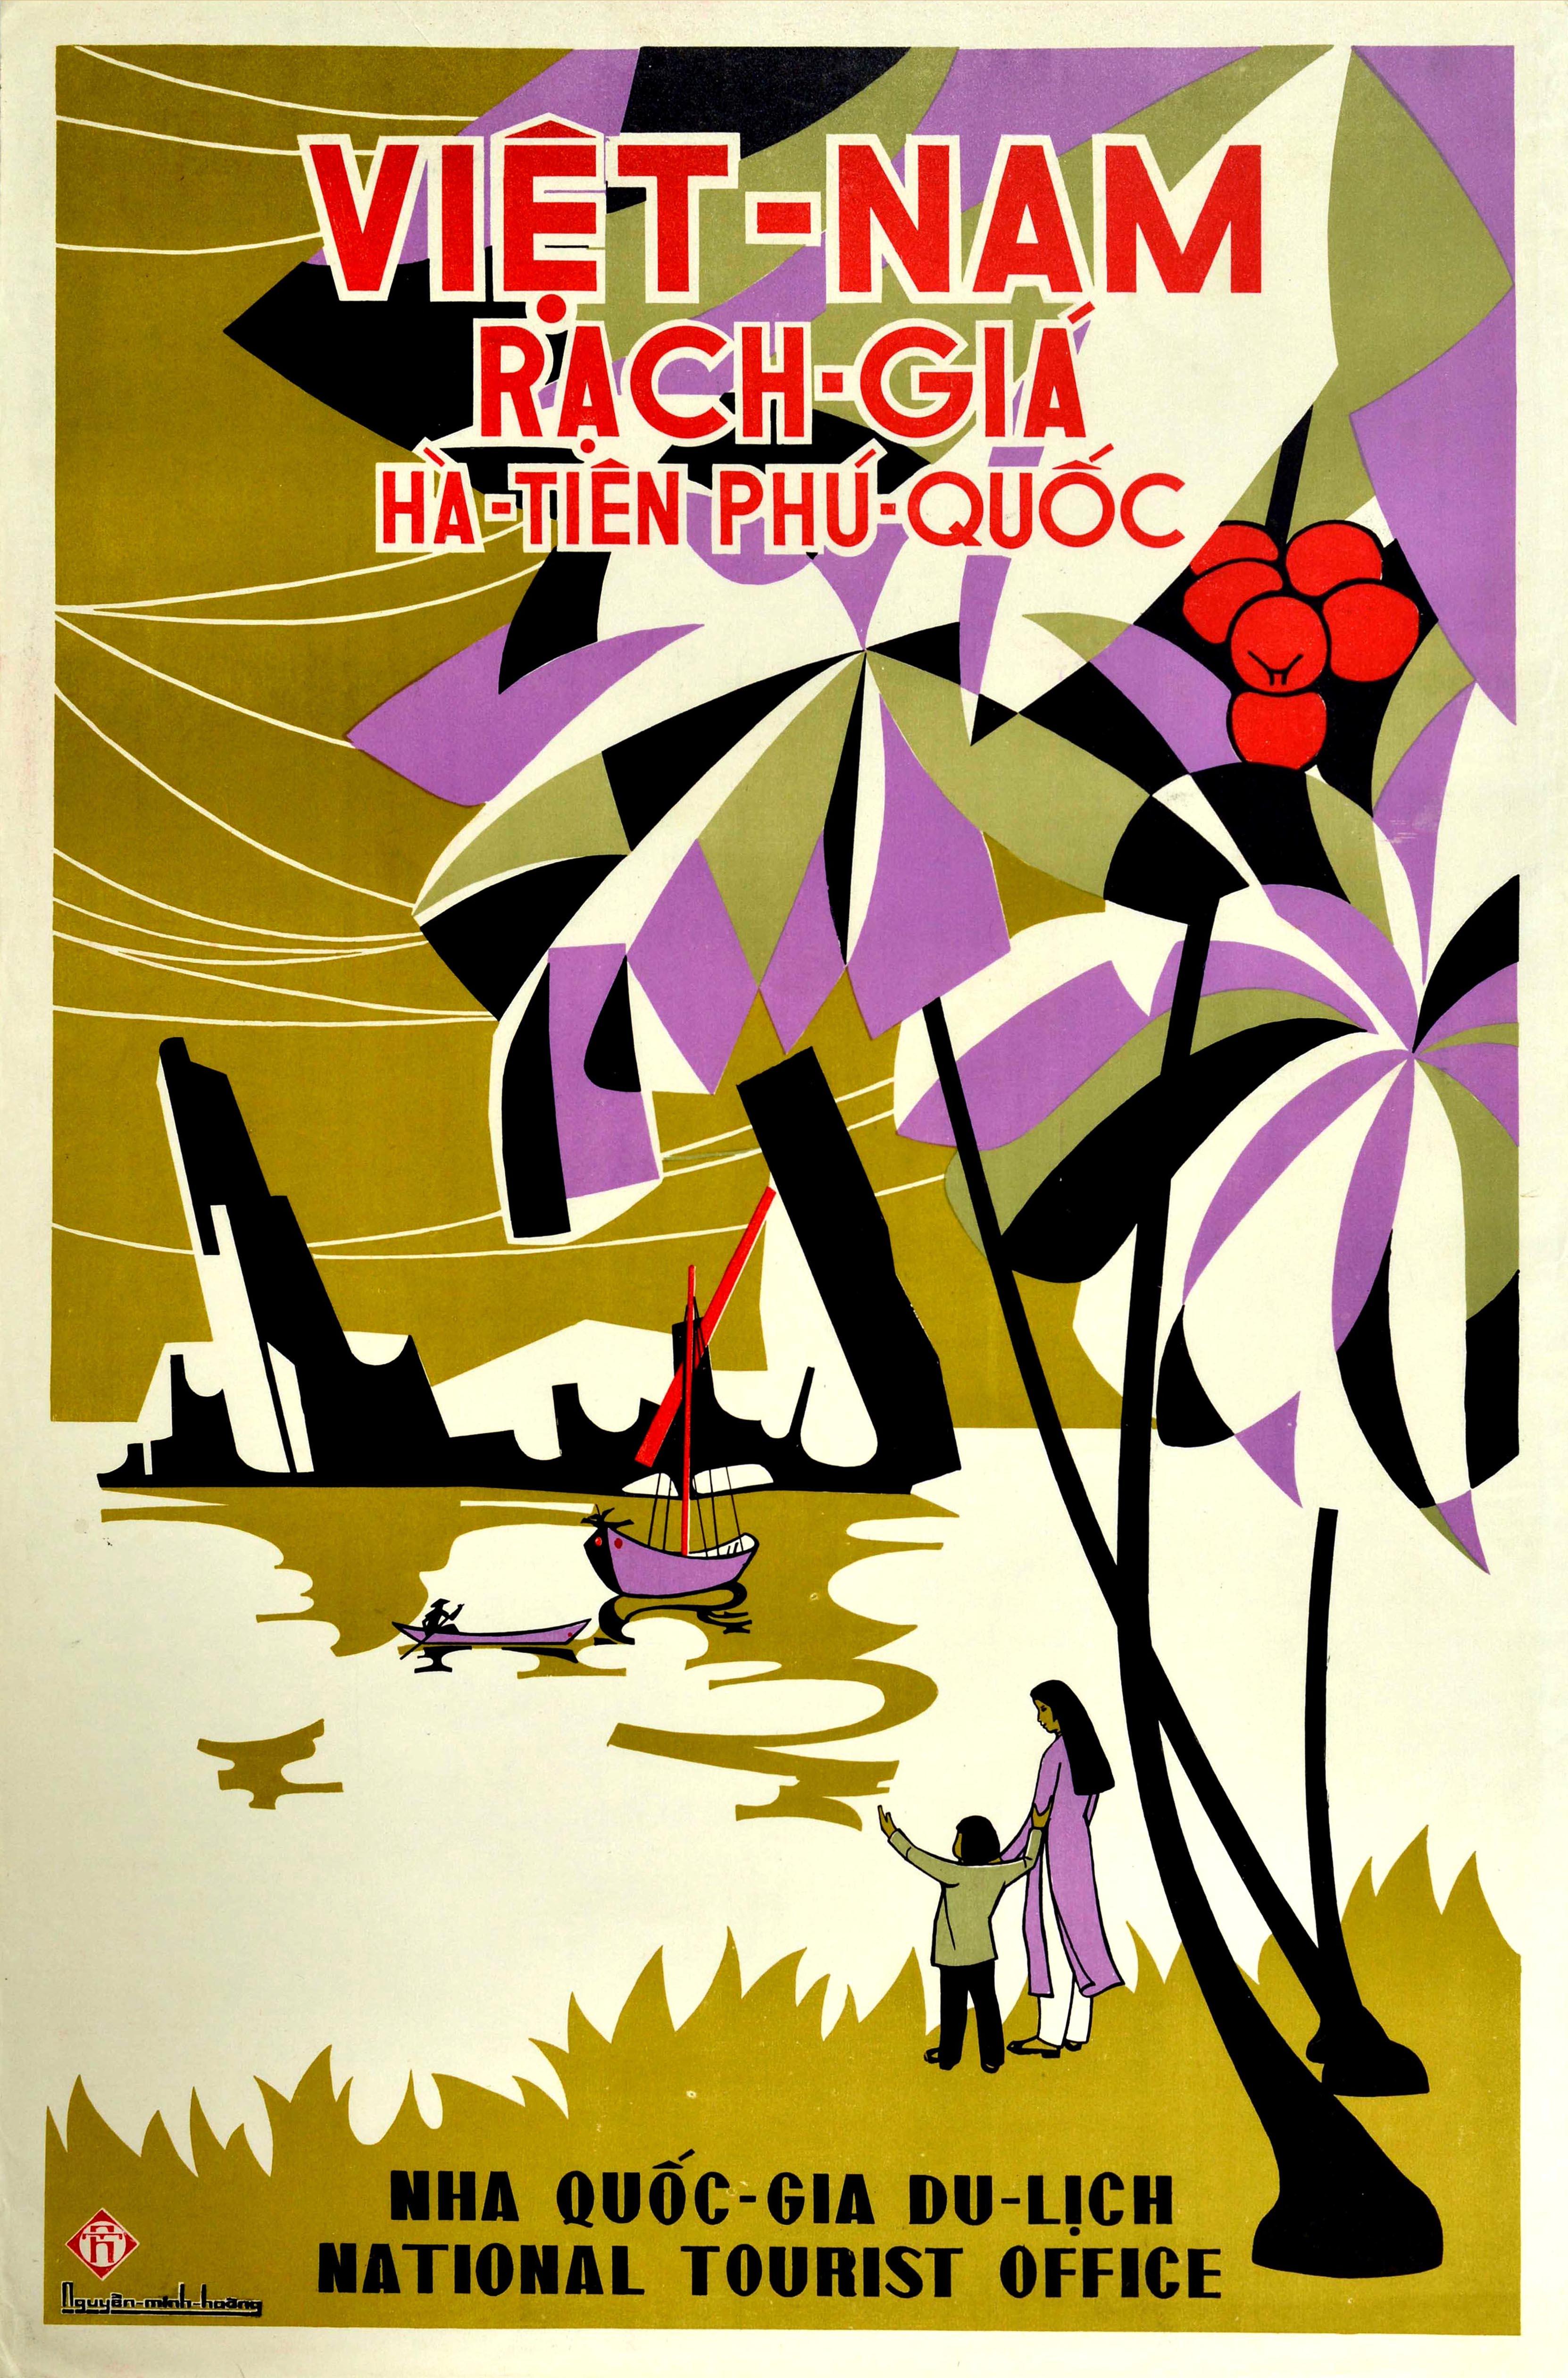 Nguyan Minh Hoang Print - Original Vintage Poster Vietnam Rach-Gia Ha-Tien Phu-Quoc Island Asia Travel Art